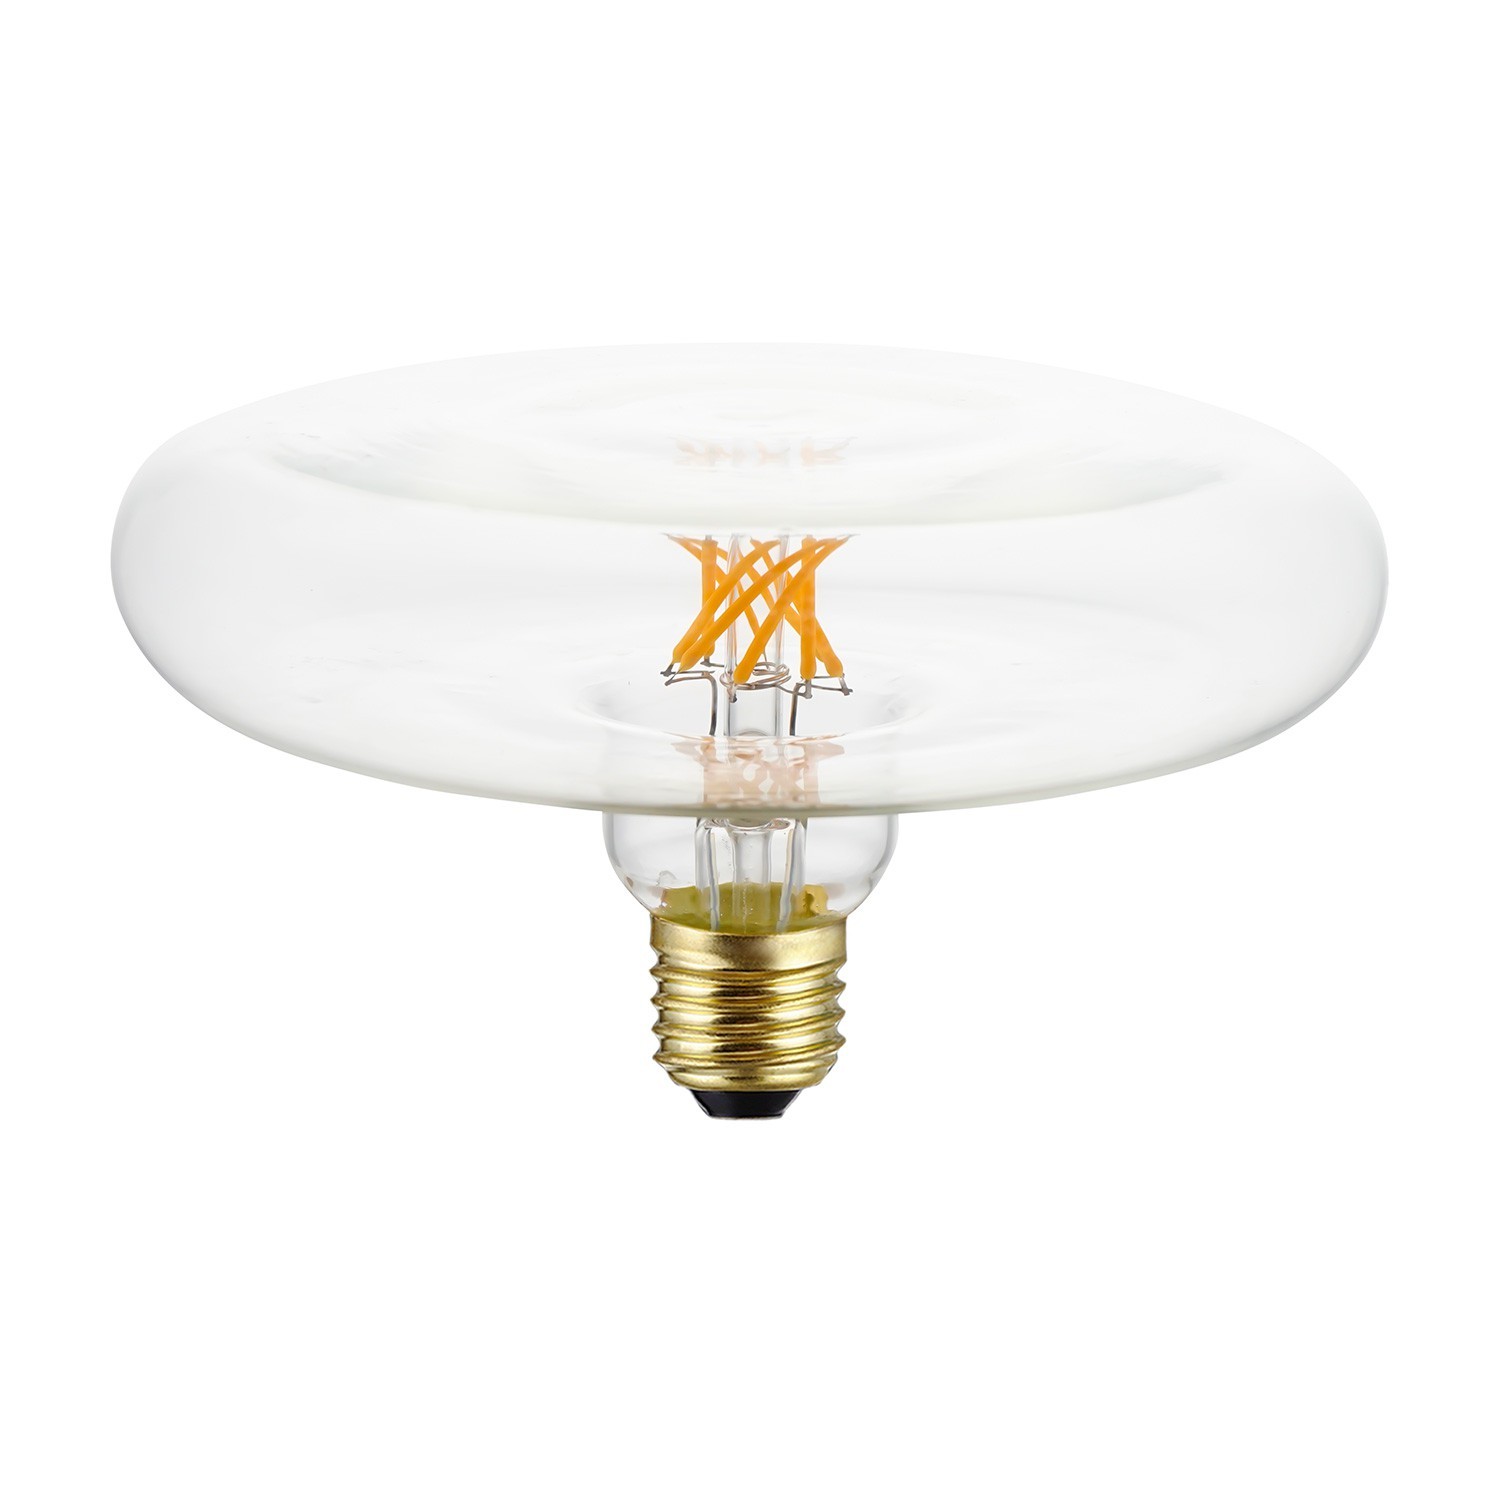 DASH D170 Transparent LED-lampa tvinnad filament 6W E27 Dimbar 2700K